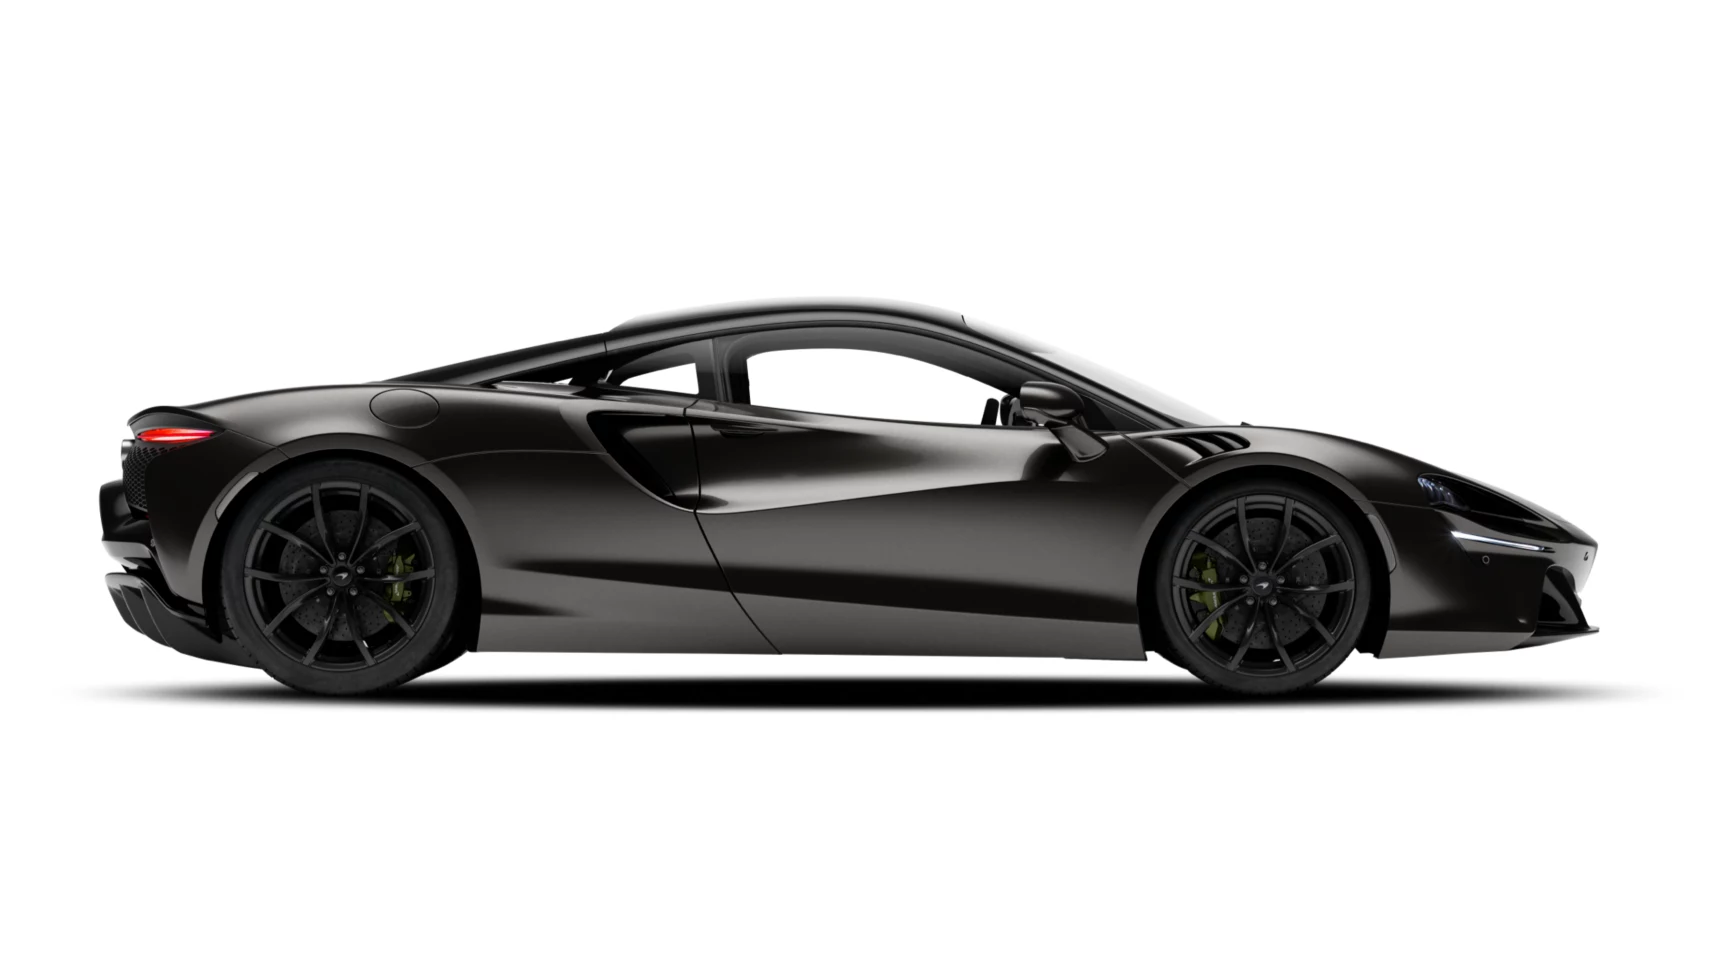 McLaren Artura exterior - Side Profile